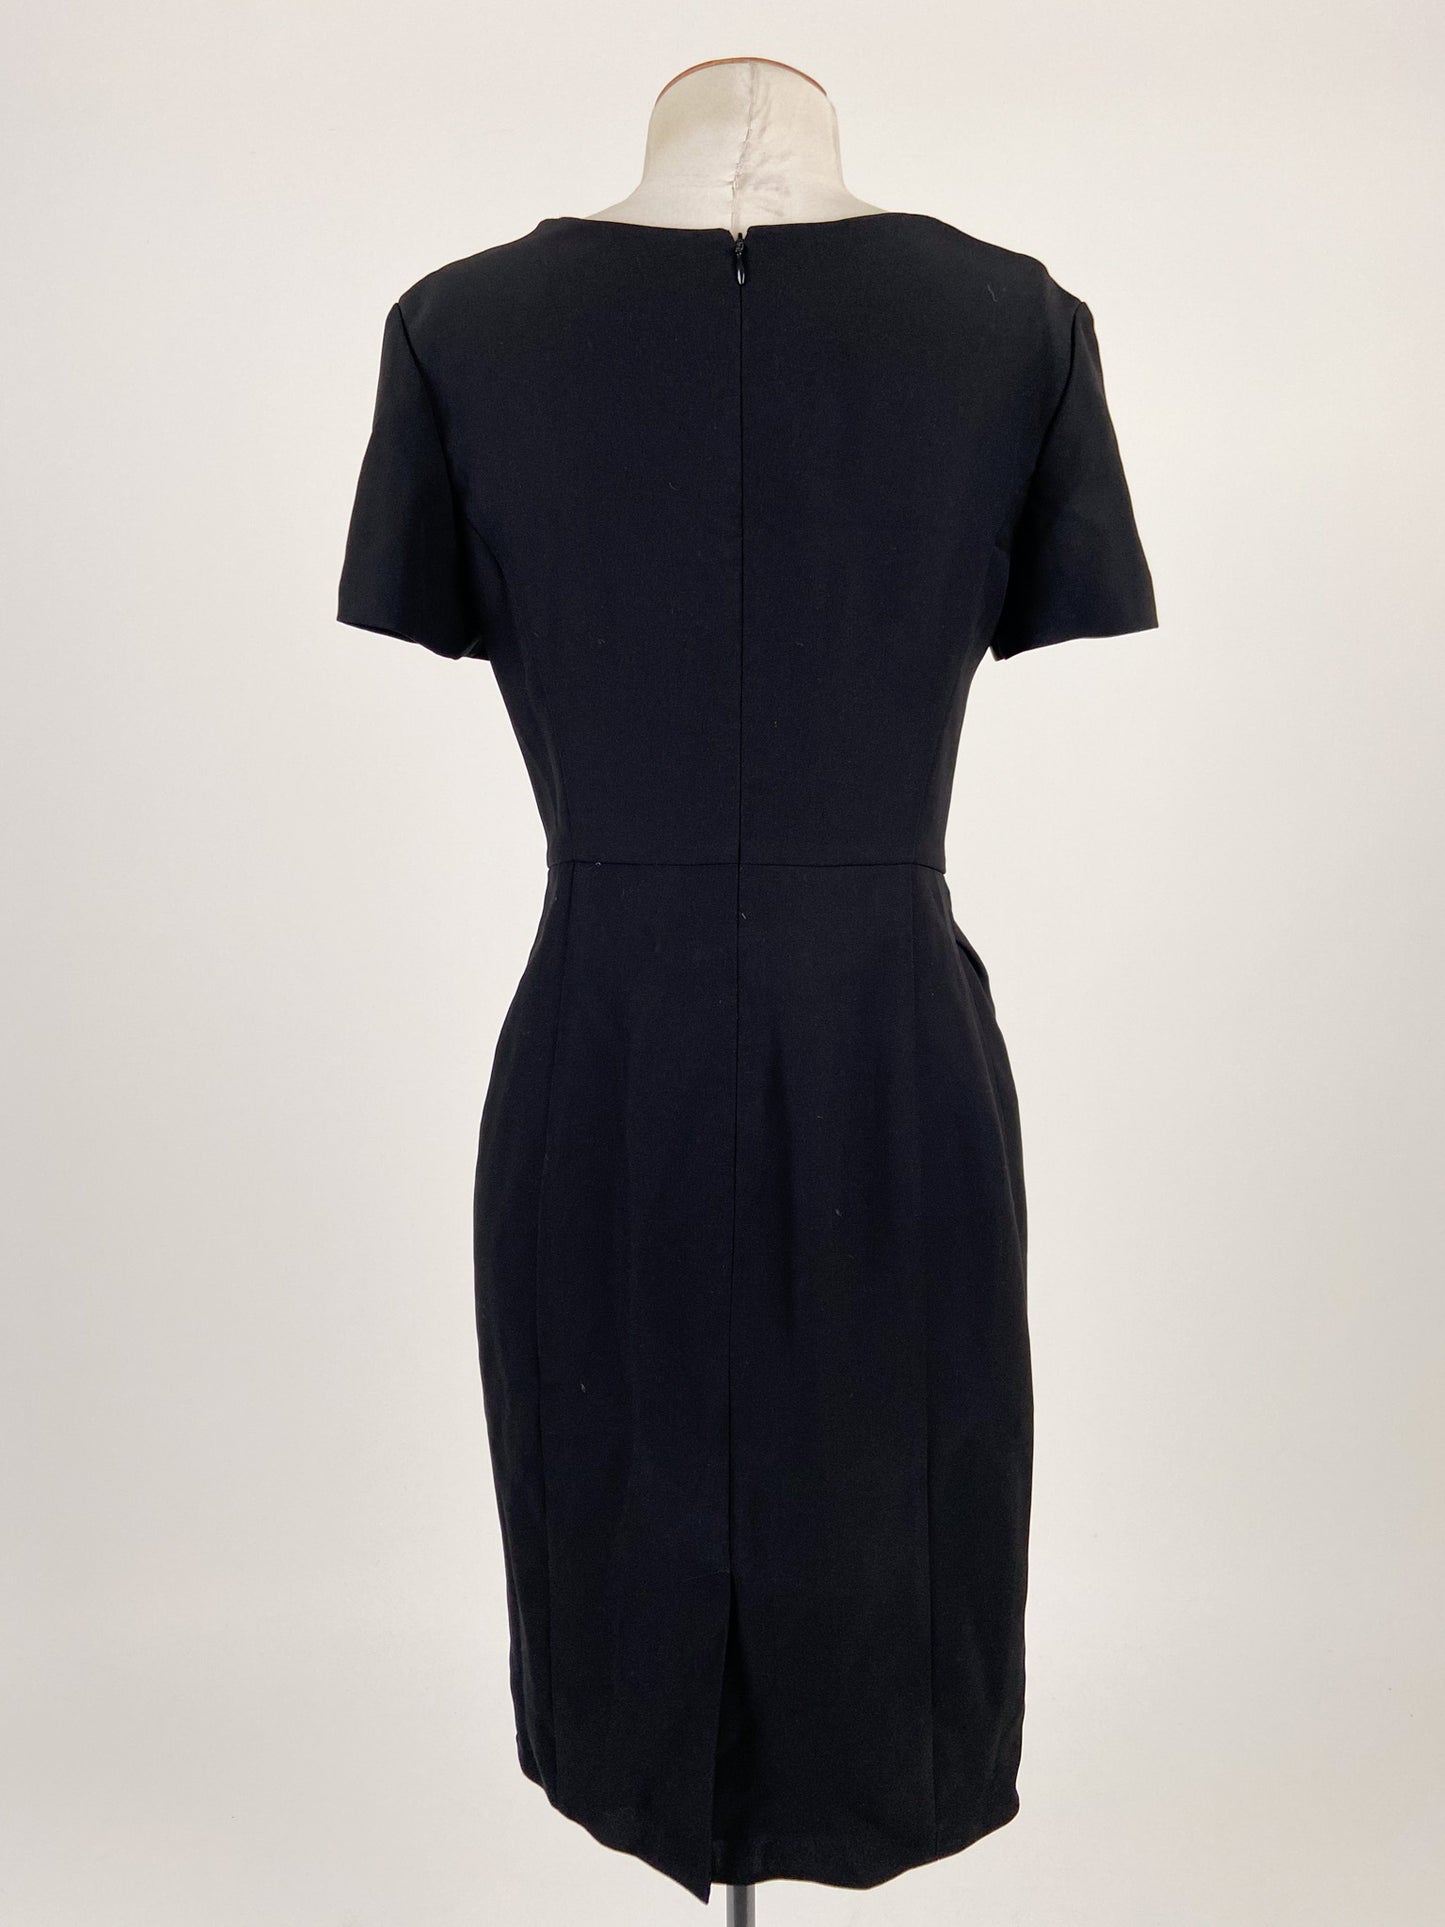 Armani | Black Workwear Dress | Size S